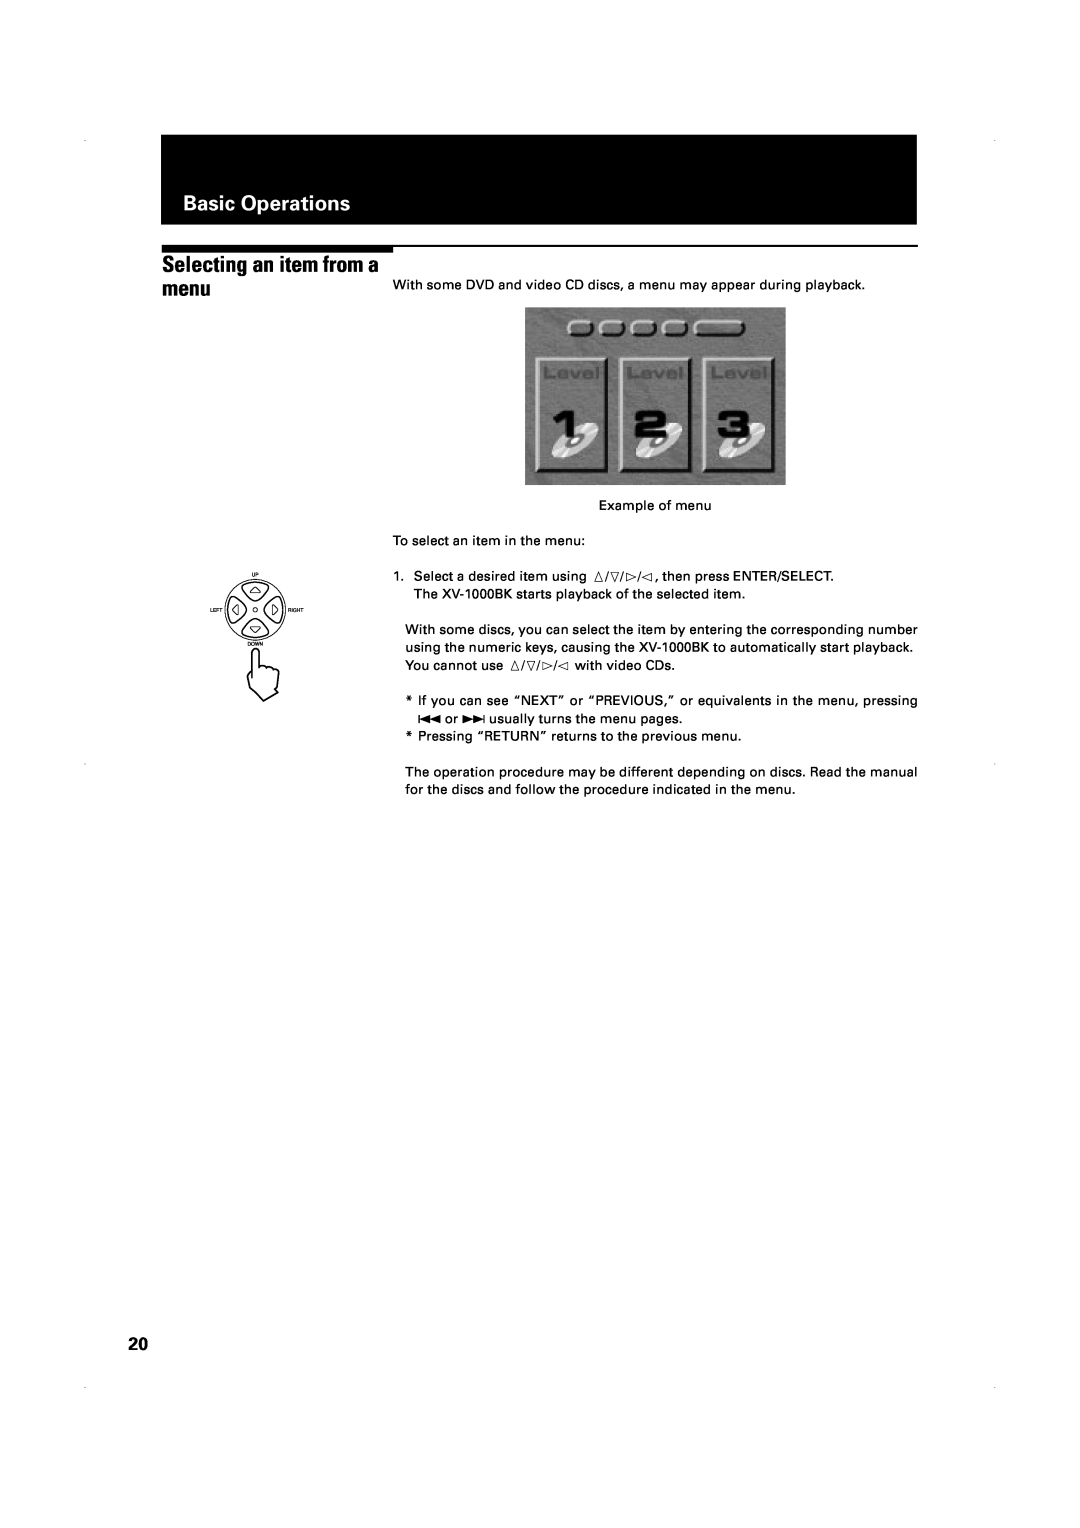 JVC XV-1000BK manual Selecting an item from a menu, Basic Operations 